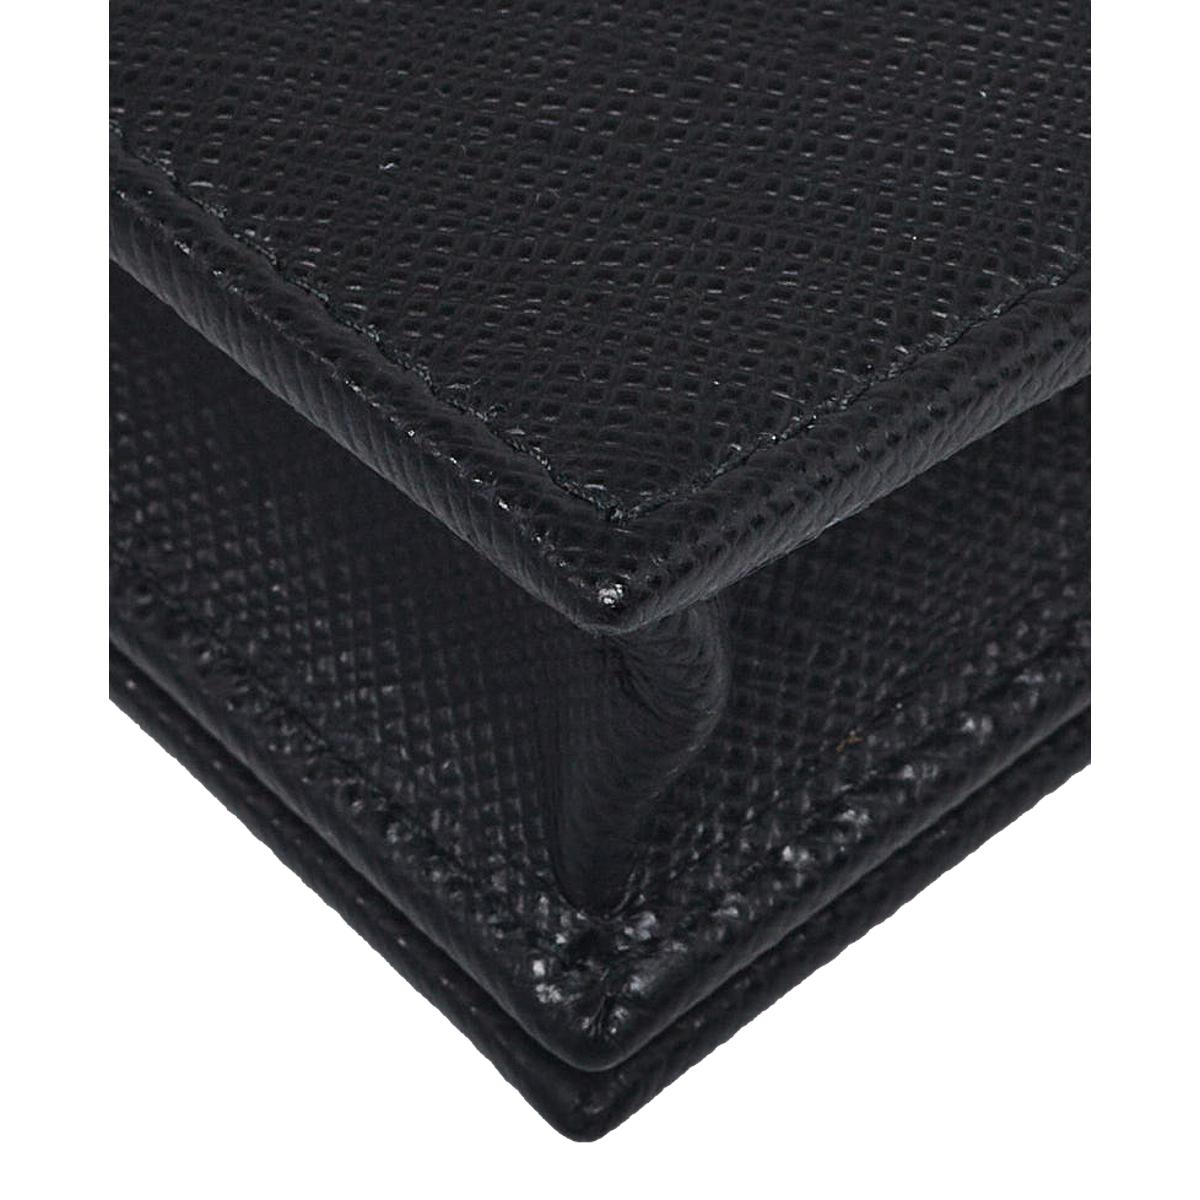 Prada Black Saffiano Leather Credit Card Case Wallet